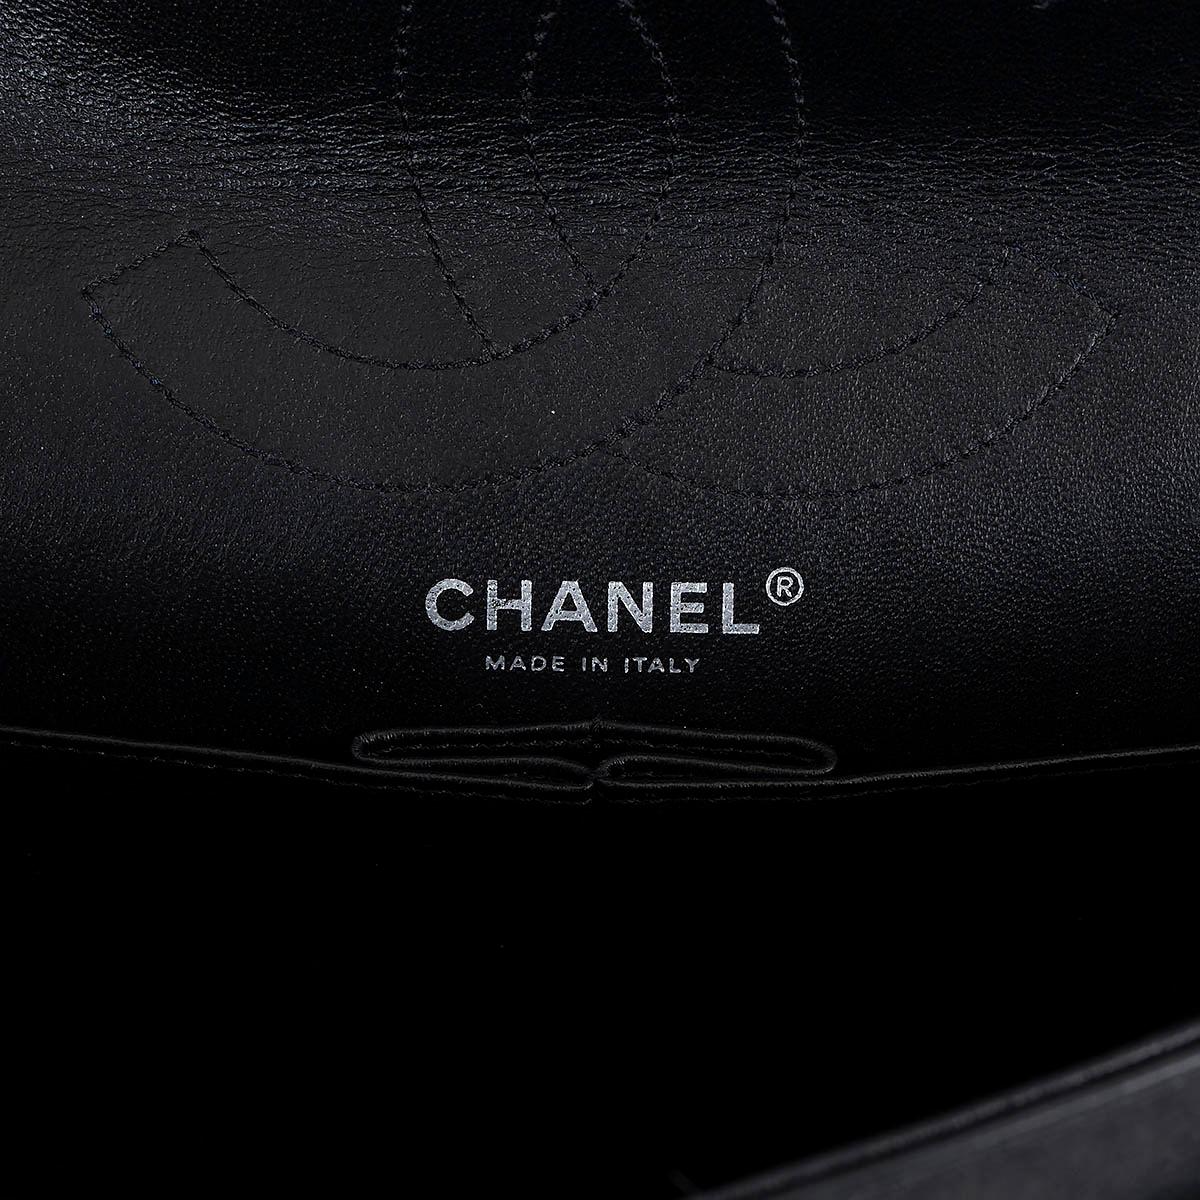 CHANEL dark brown patent leather 2.55 REISSUE 226 LARGE Shoulder Bag For Sale 4